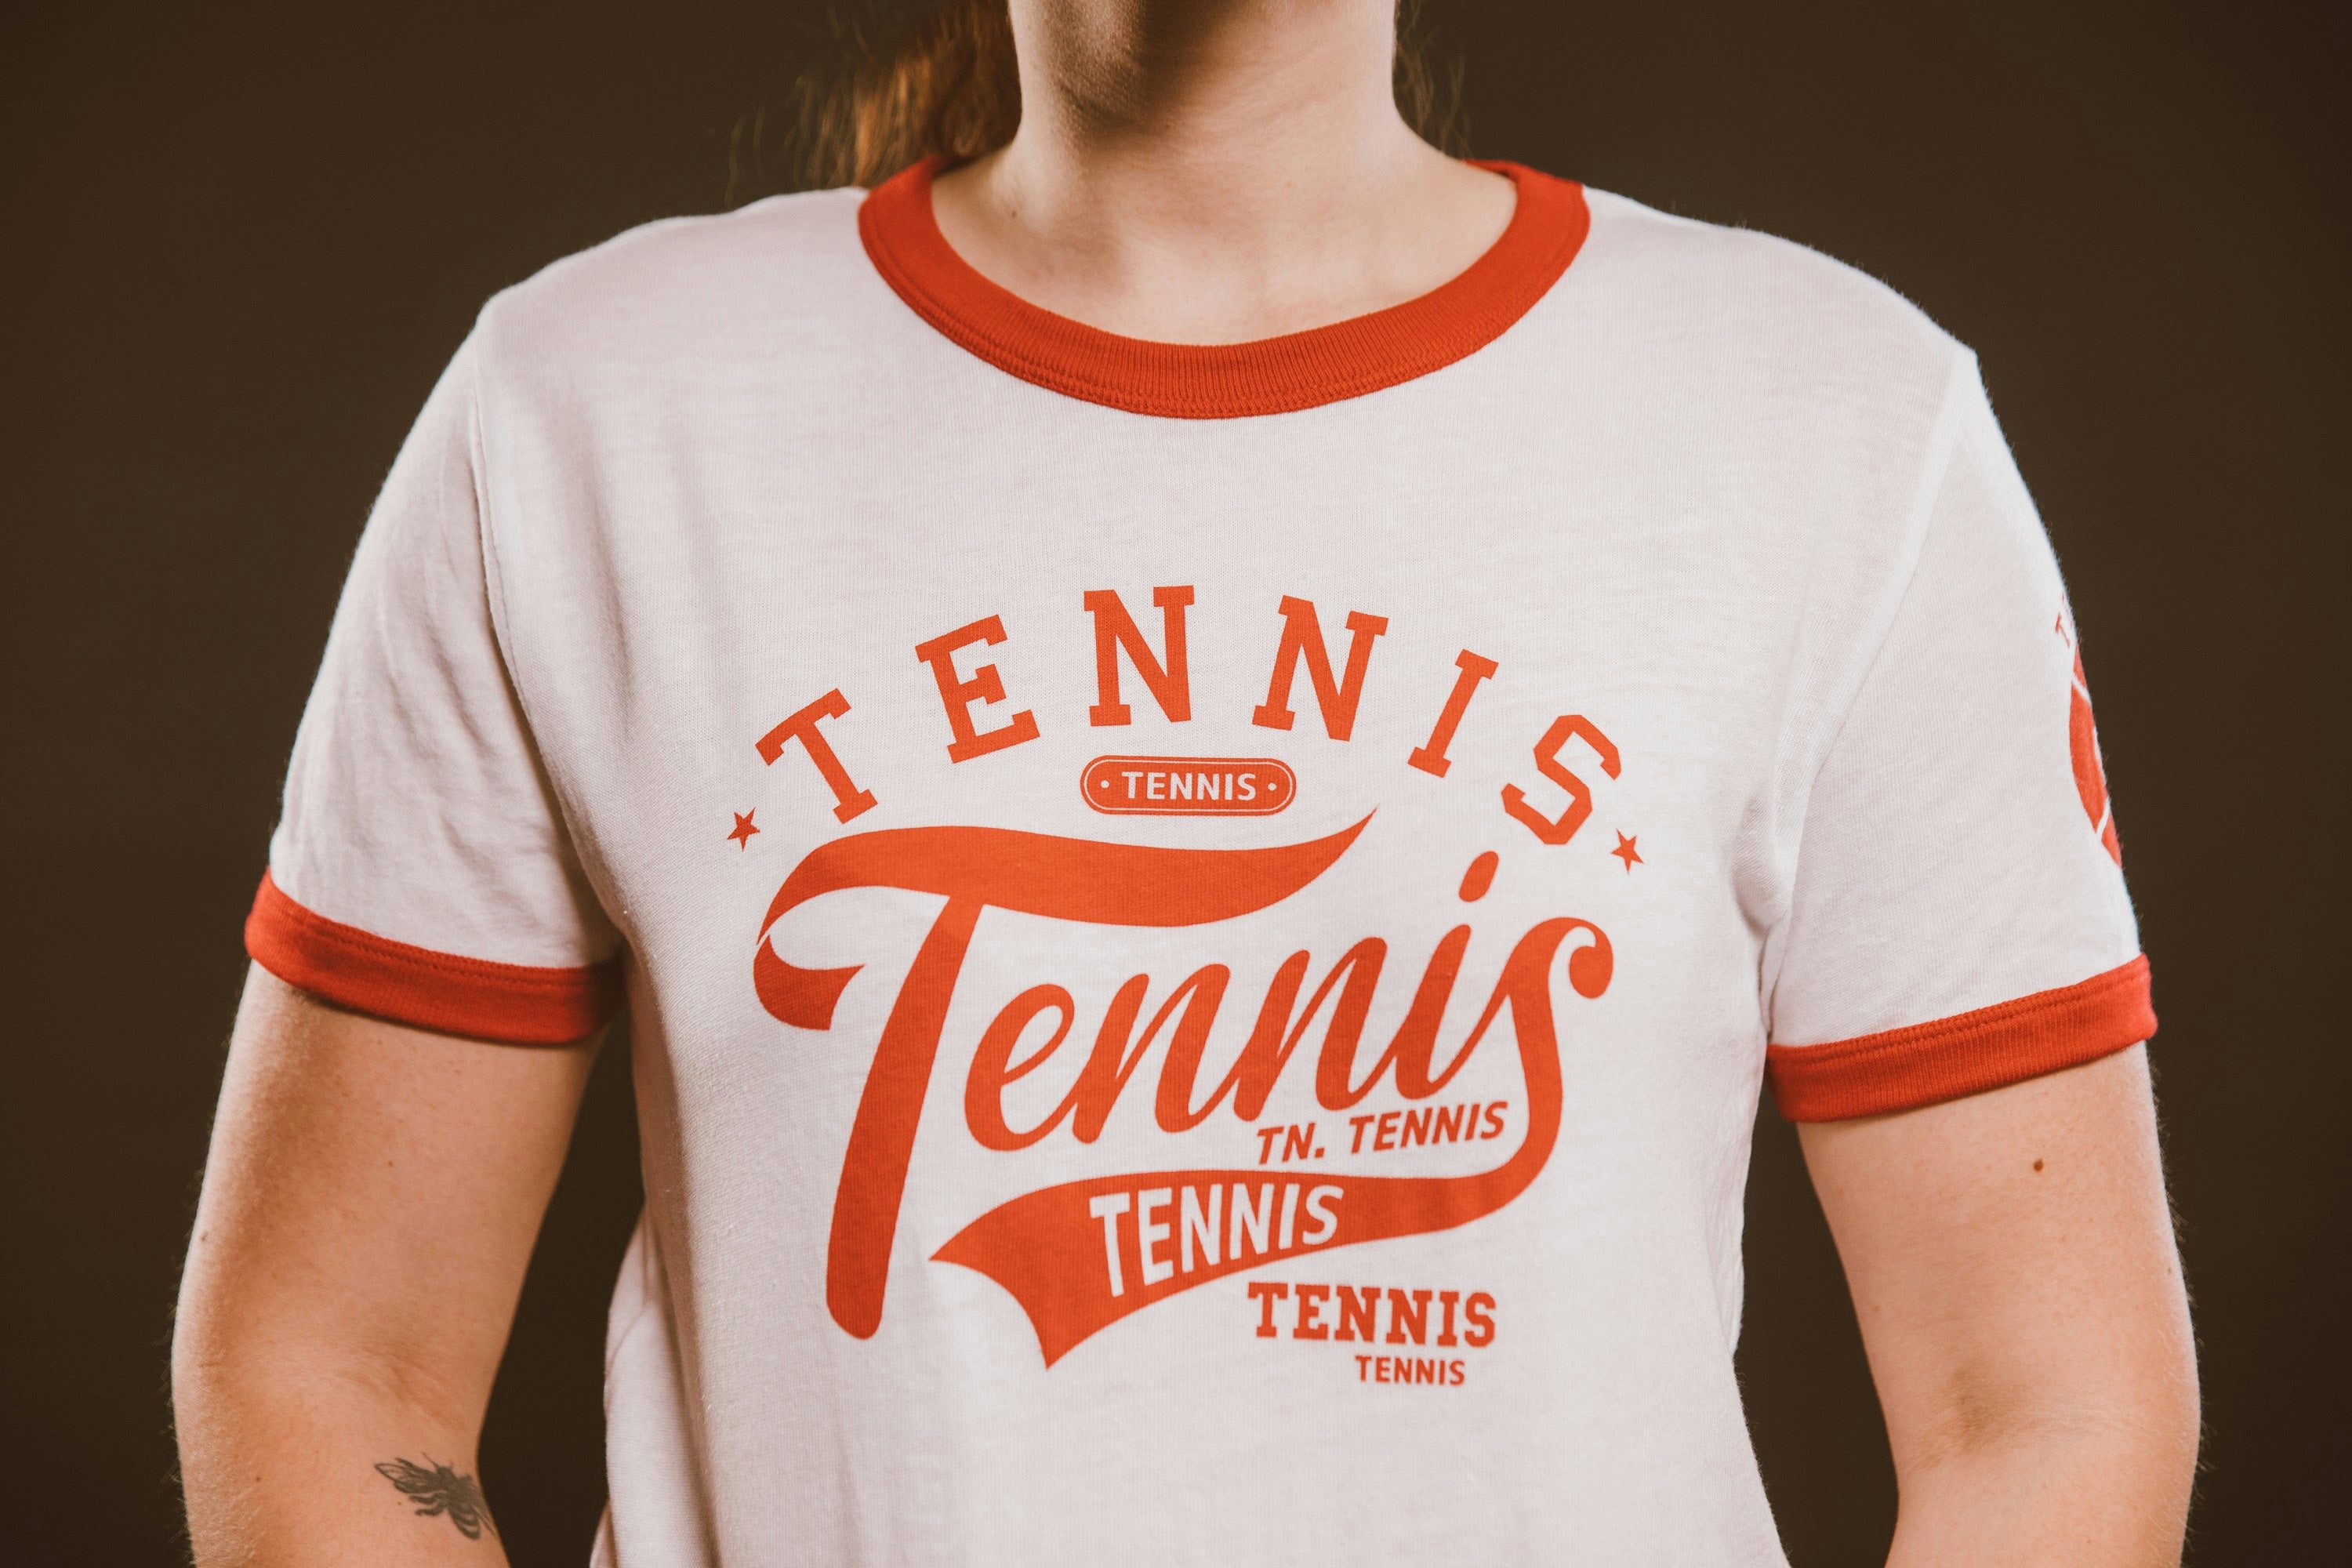 Game Grumps "Tennis" Unisex Ringer Tee (White/Red Variant)